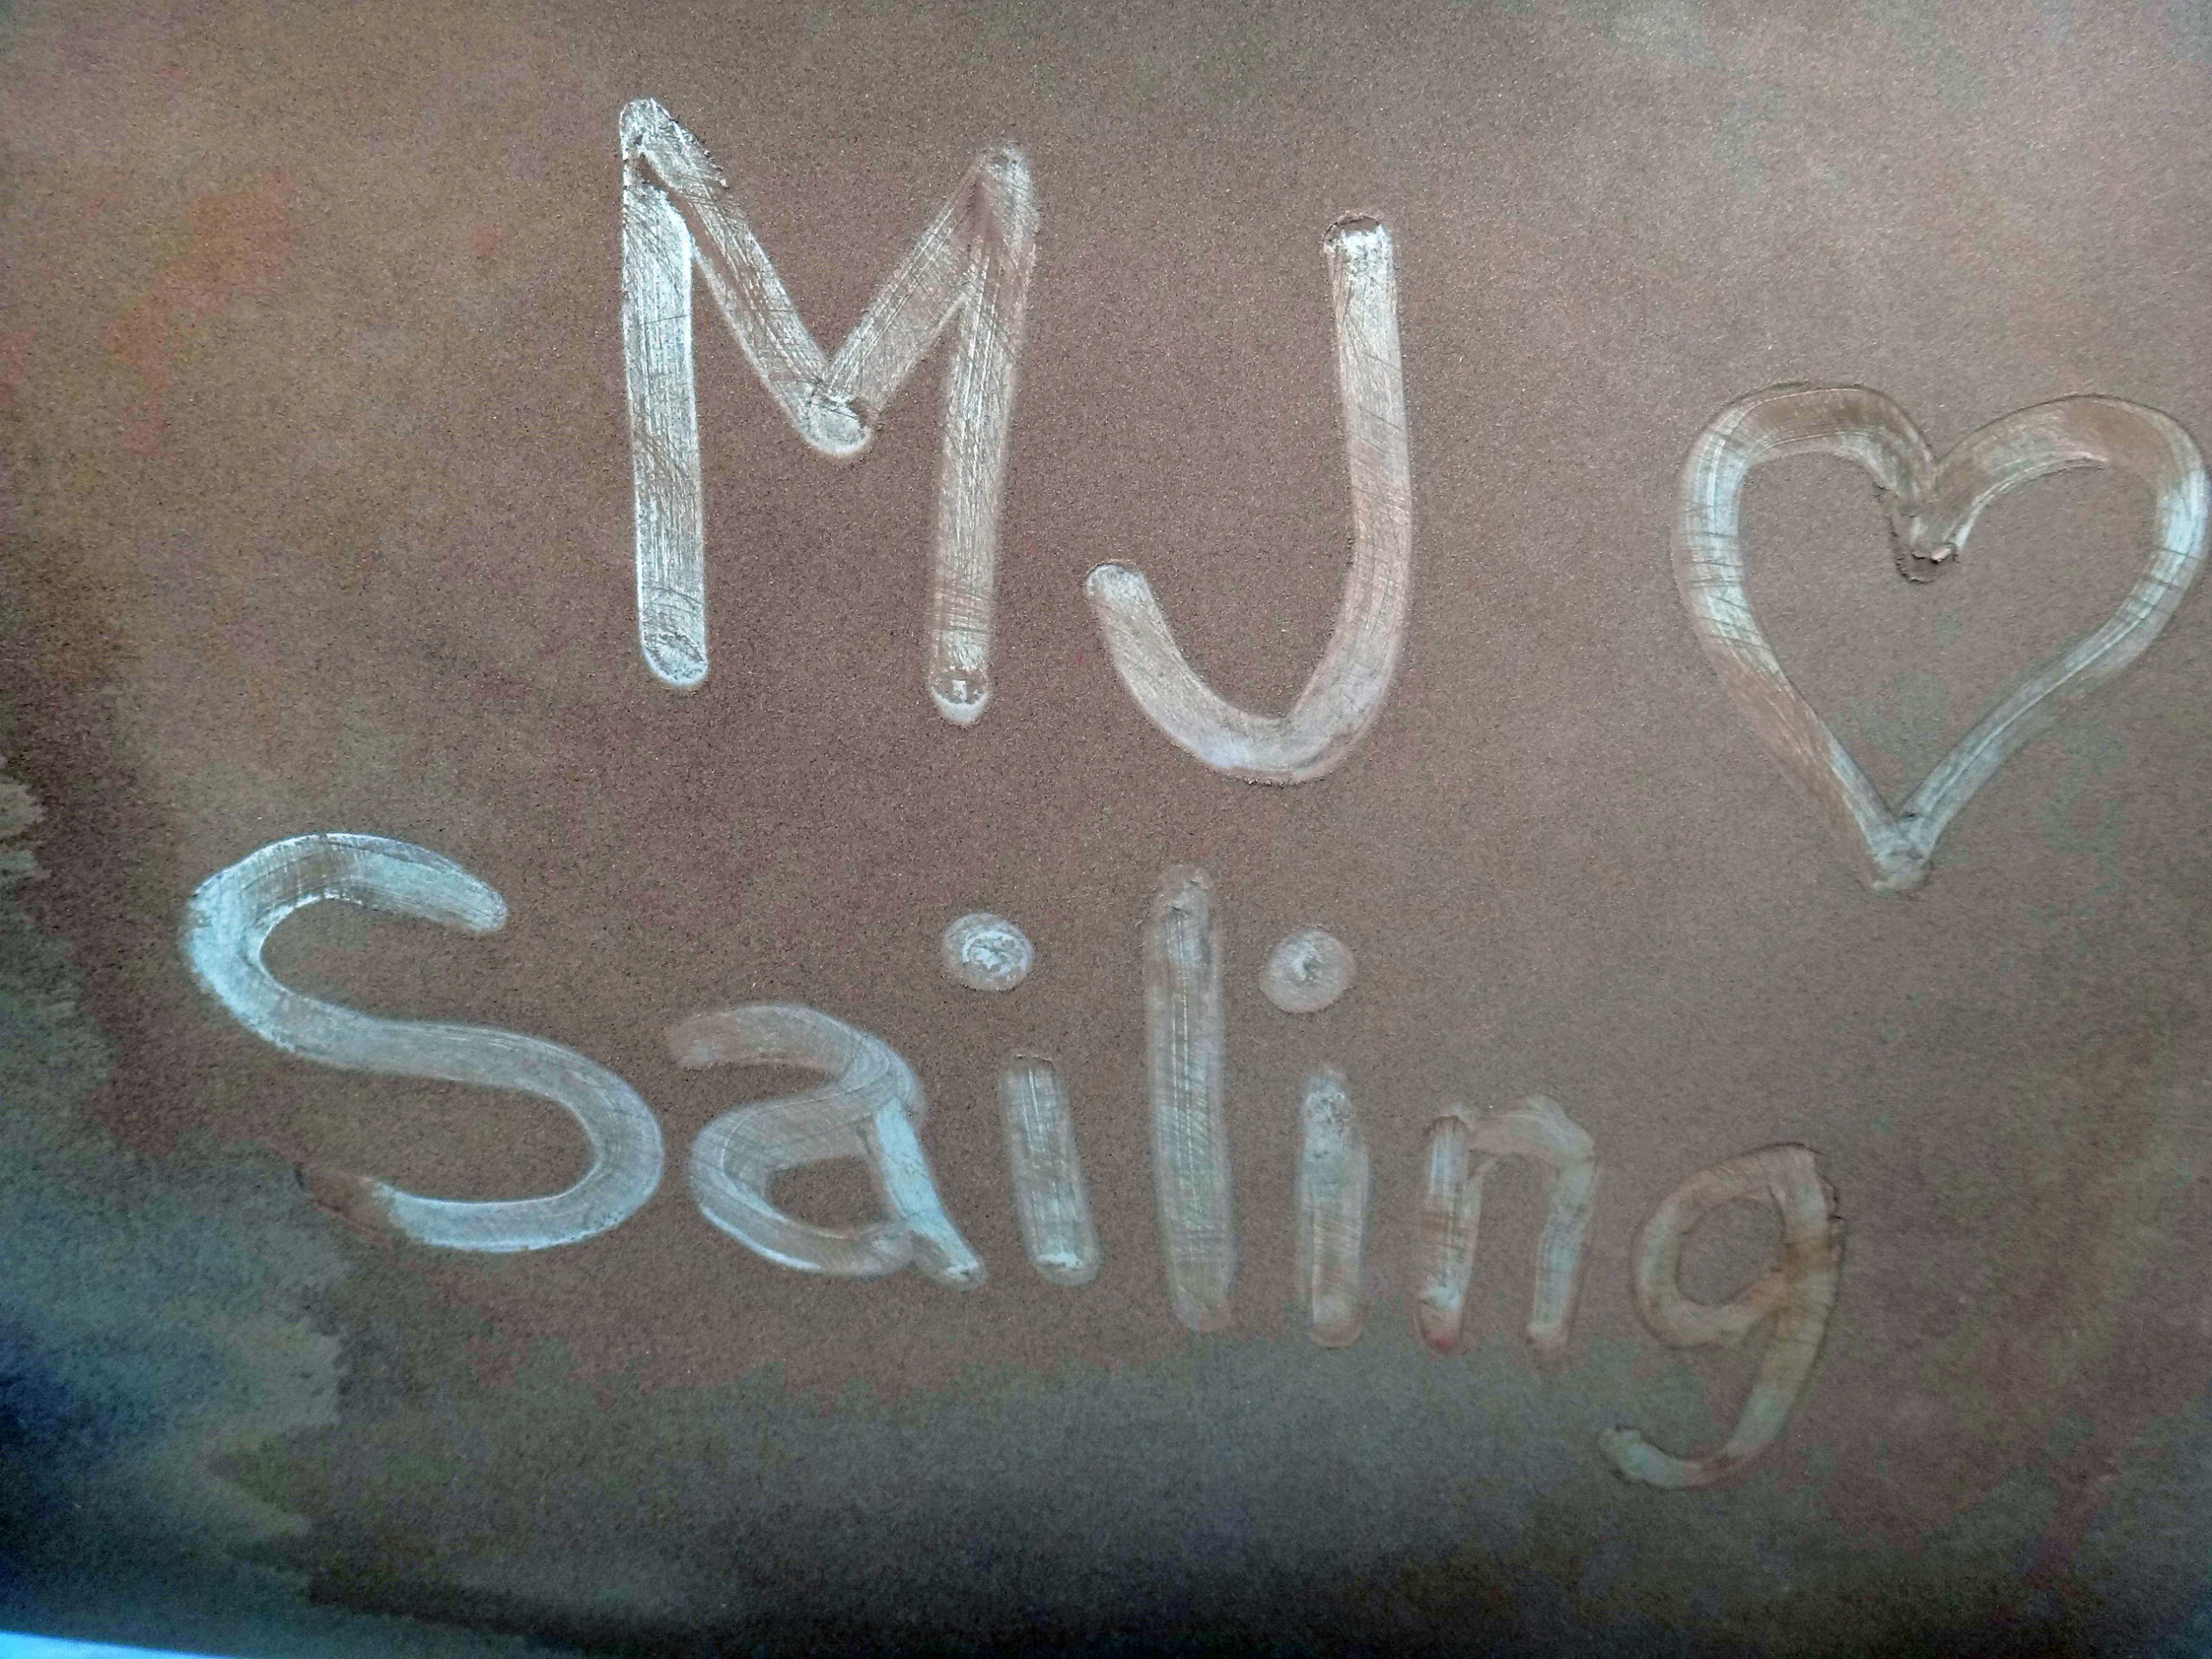 Matt & Jessica's Sailing Page